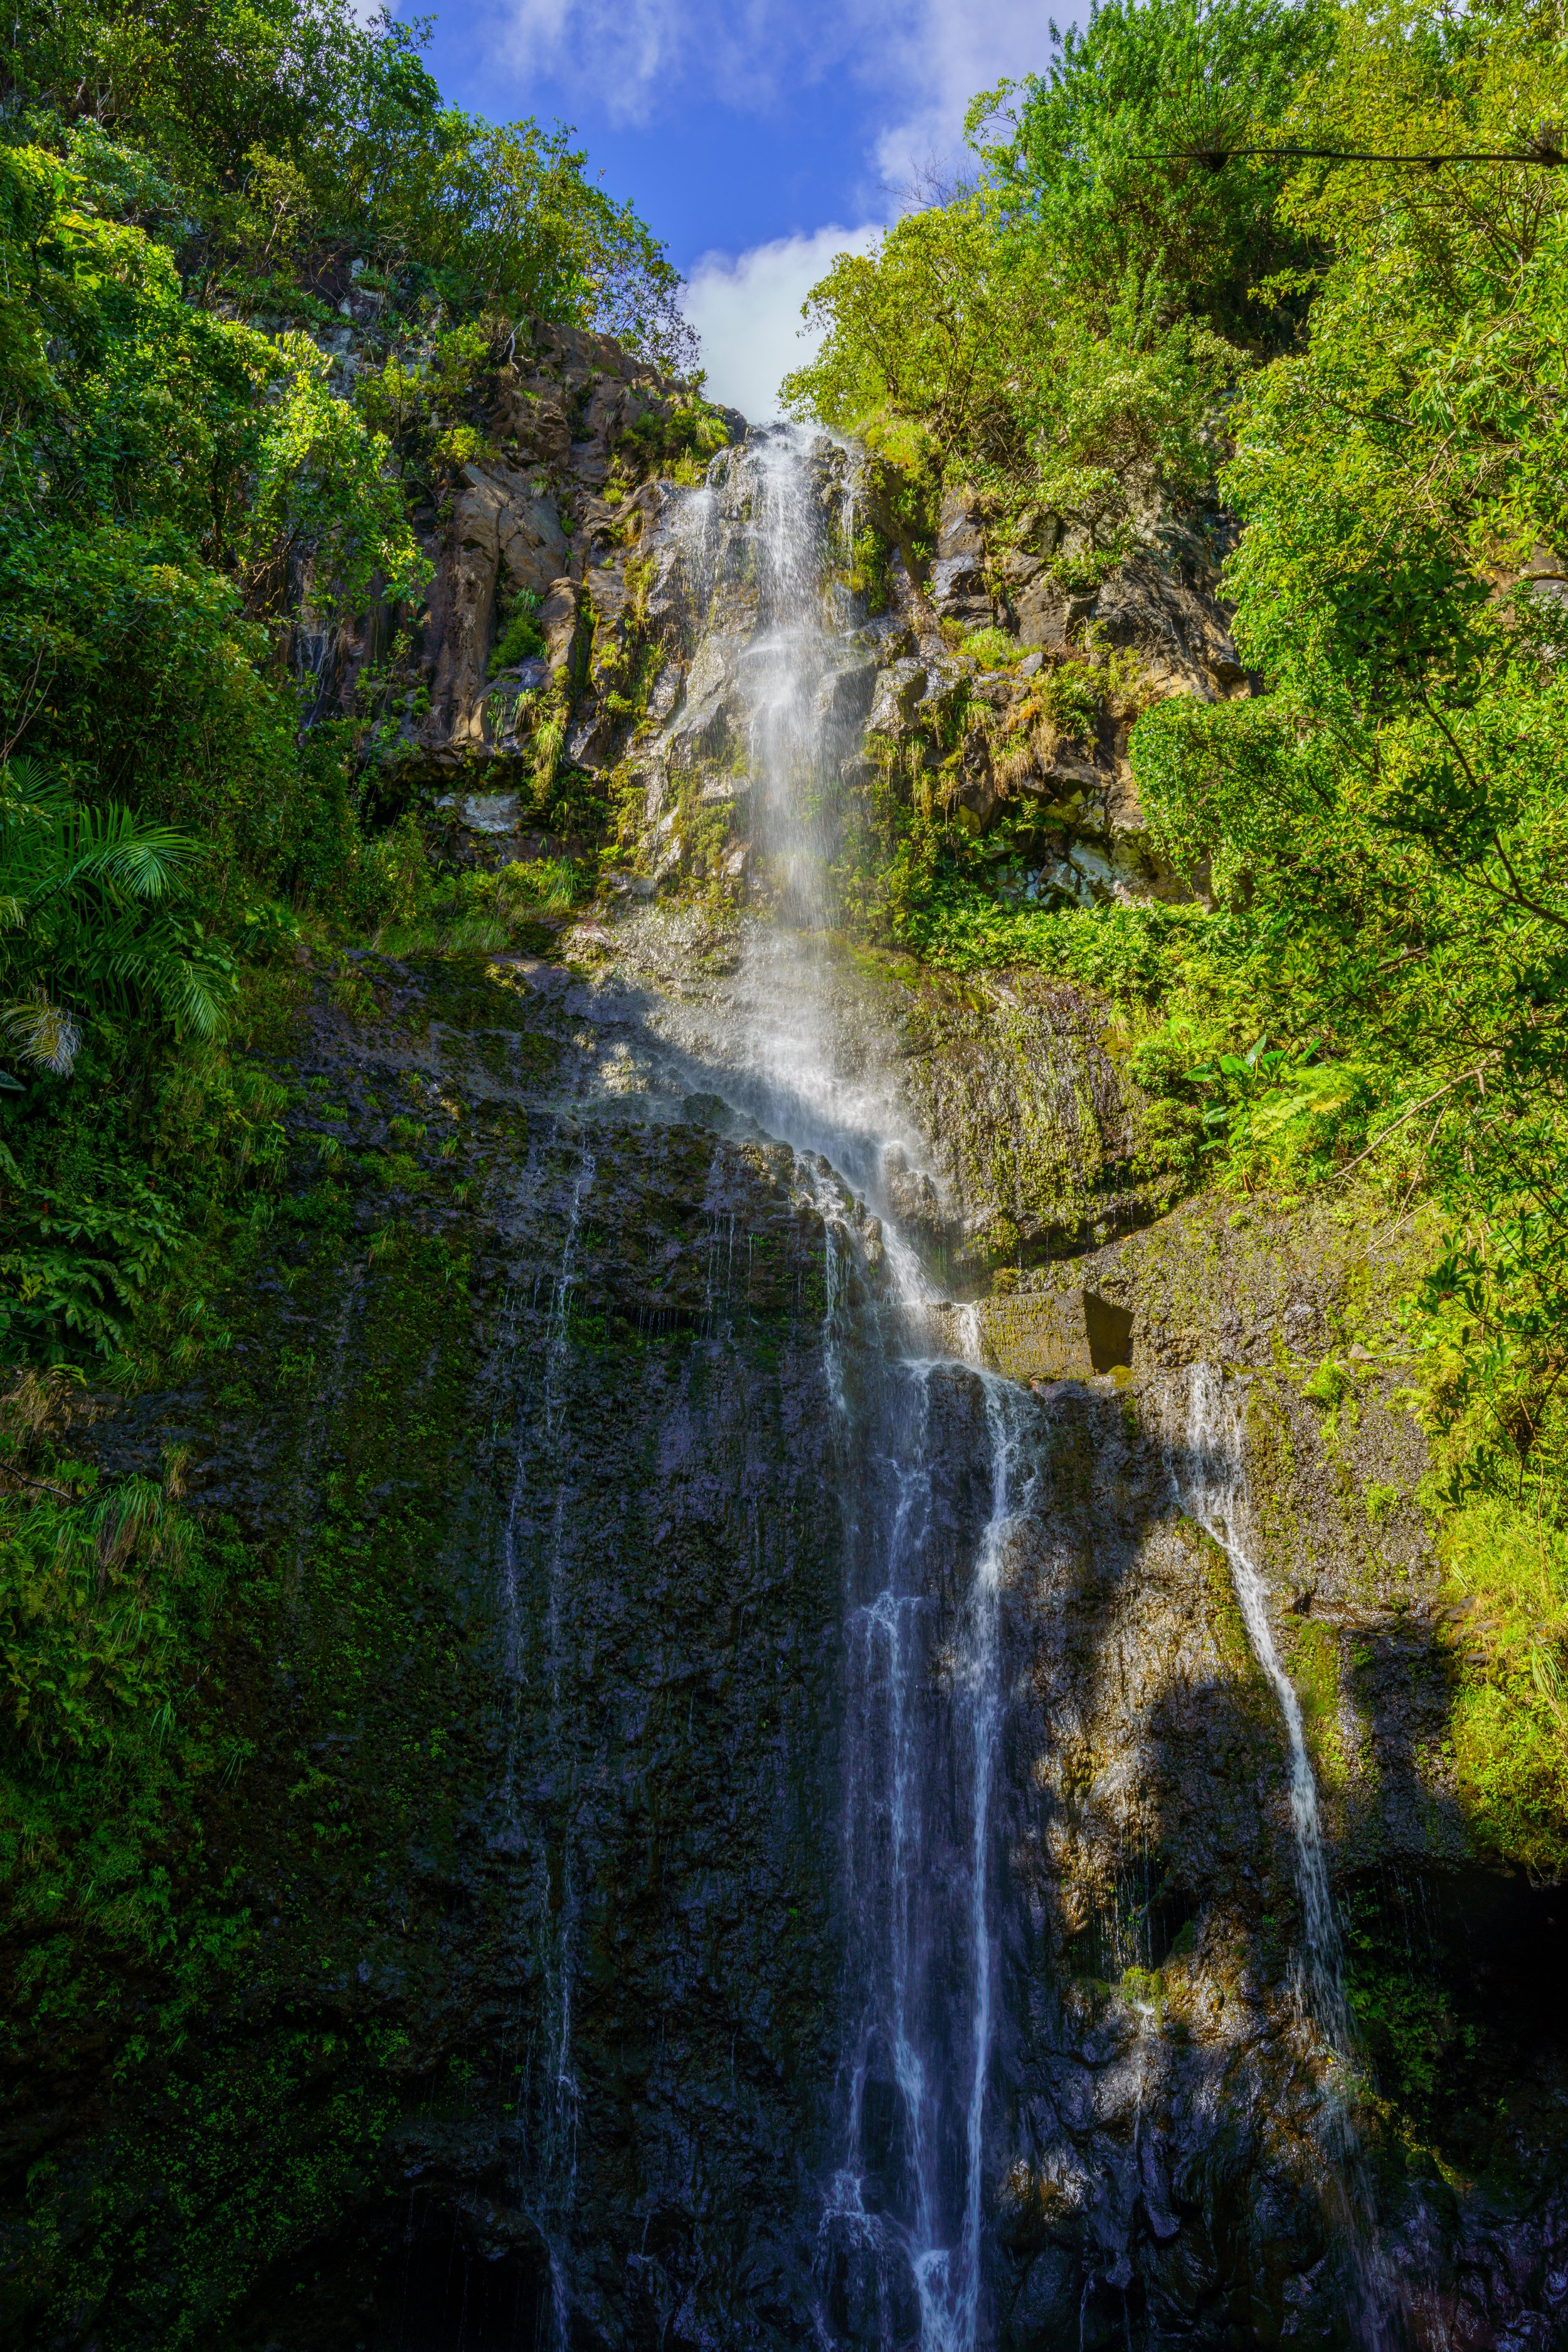  The lovely Wailua Falls 